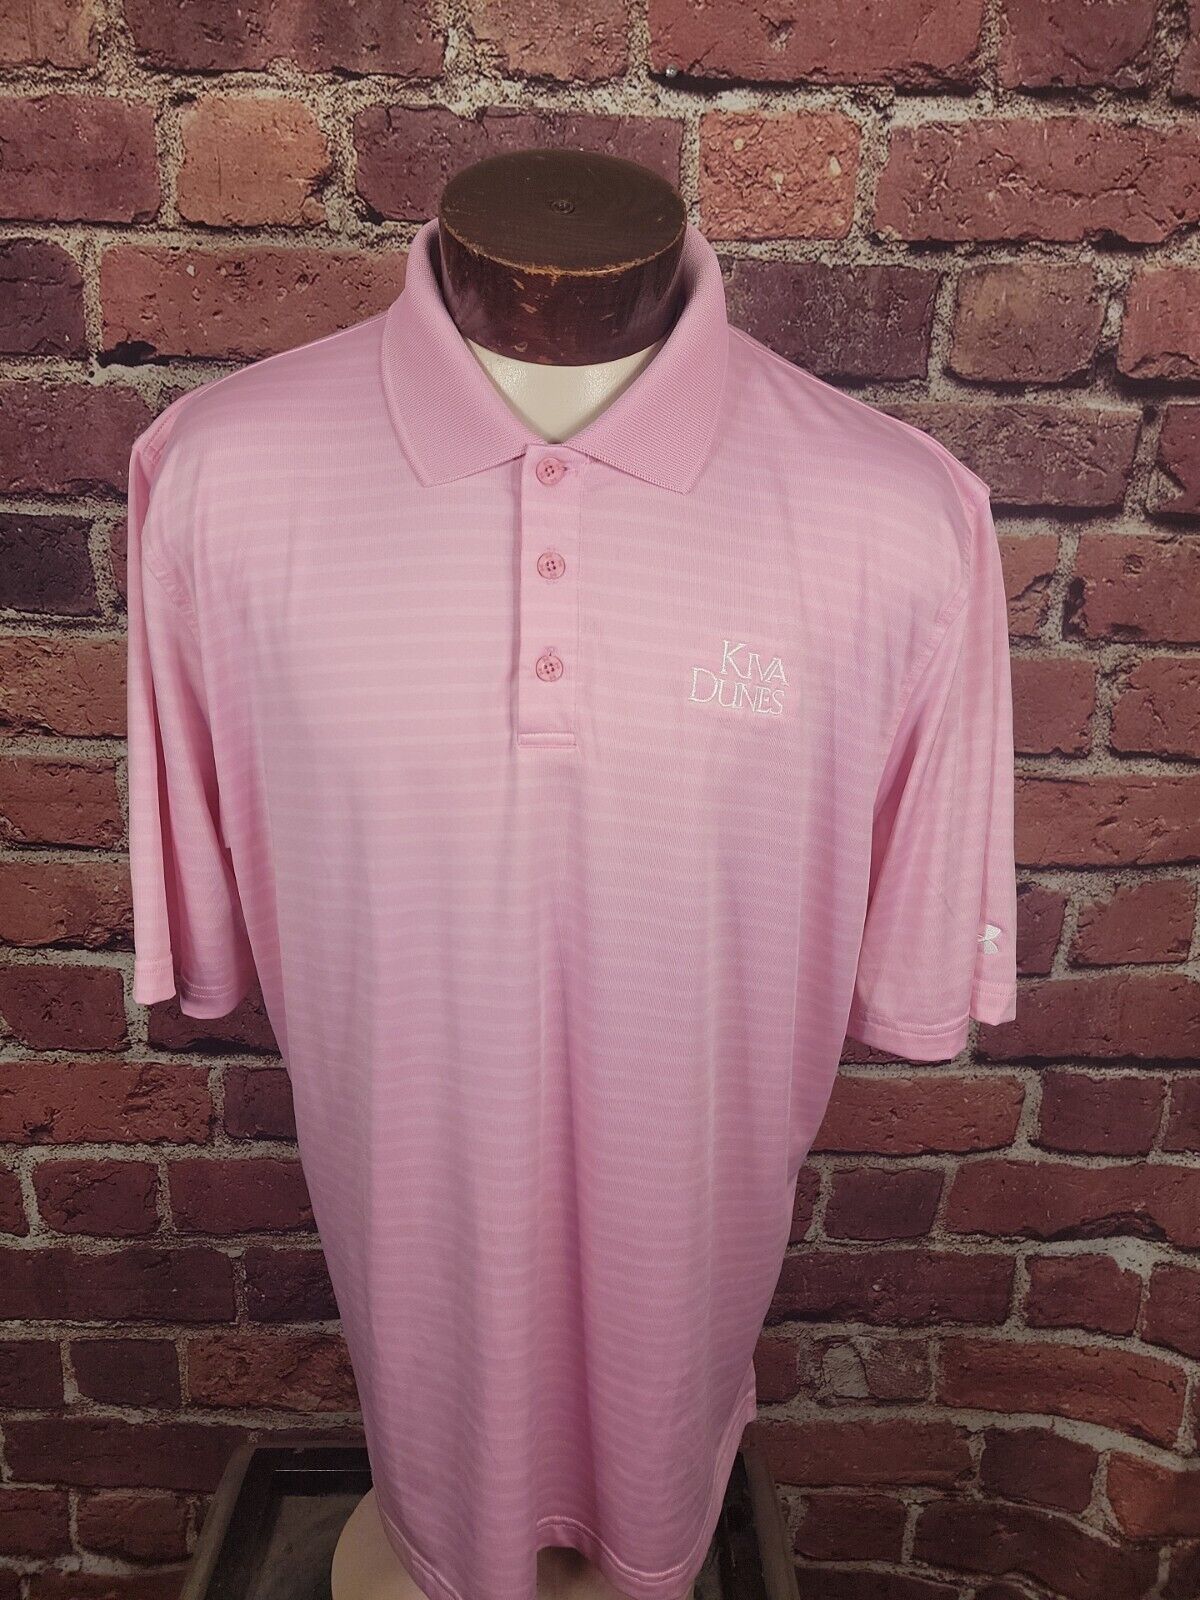 Under Armour Men\'s XL Pink White Kiva Dunes Short Sleeve Golf Polo Shirt 🛺